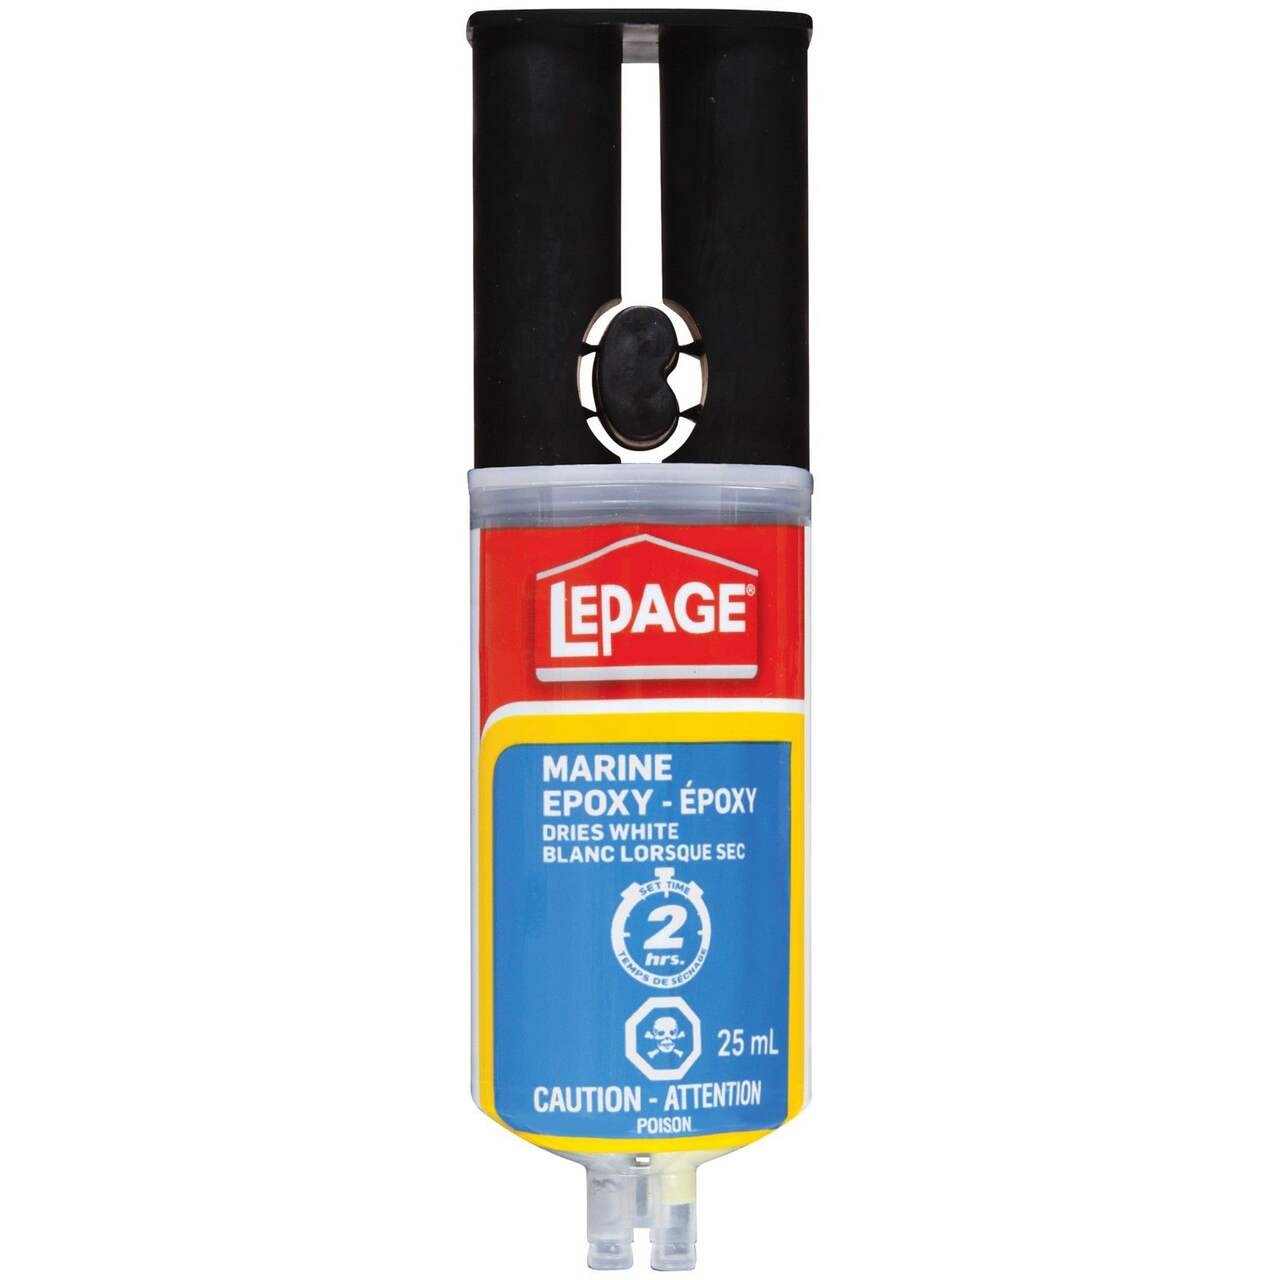 LePage Marine Epoxy Waterproof Adhesive Glue Bonds Wet/Underwater